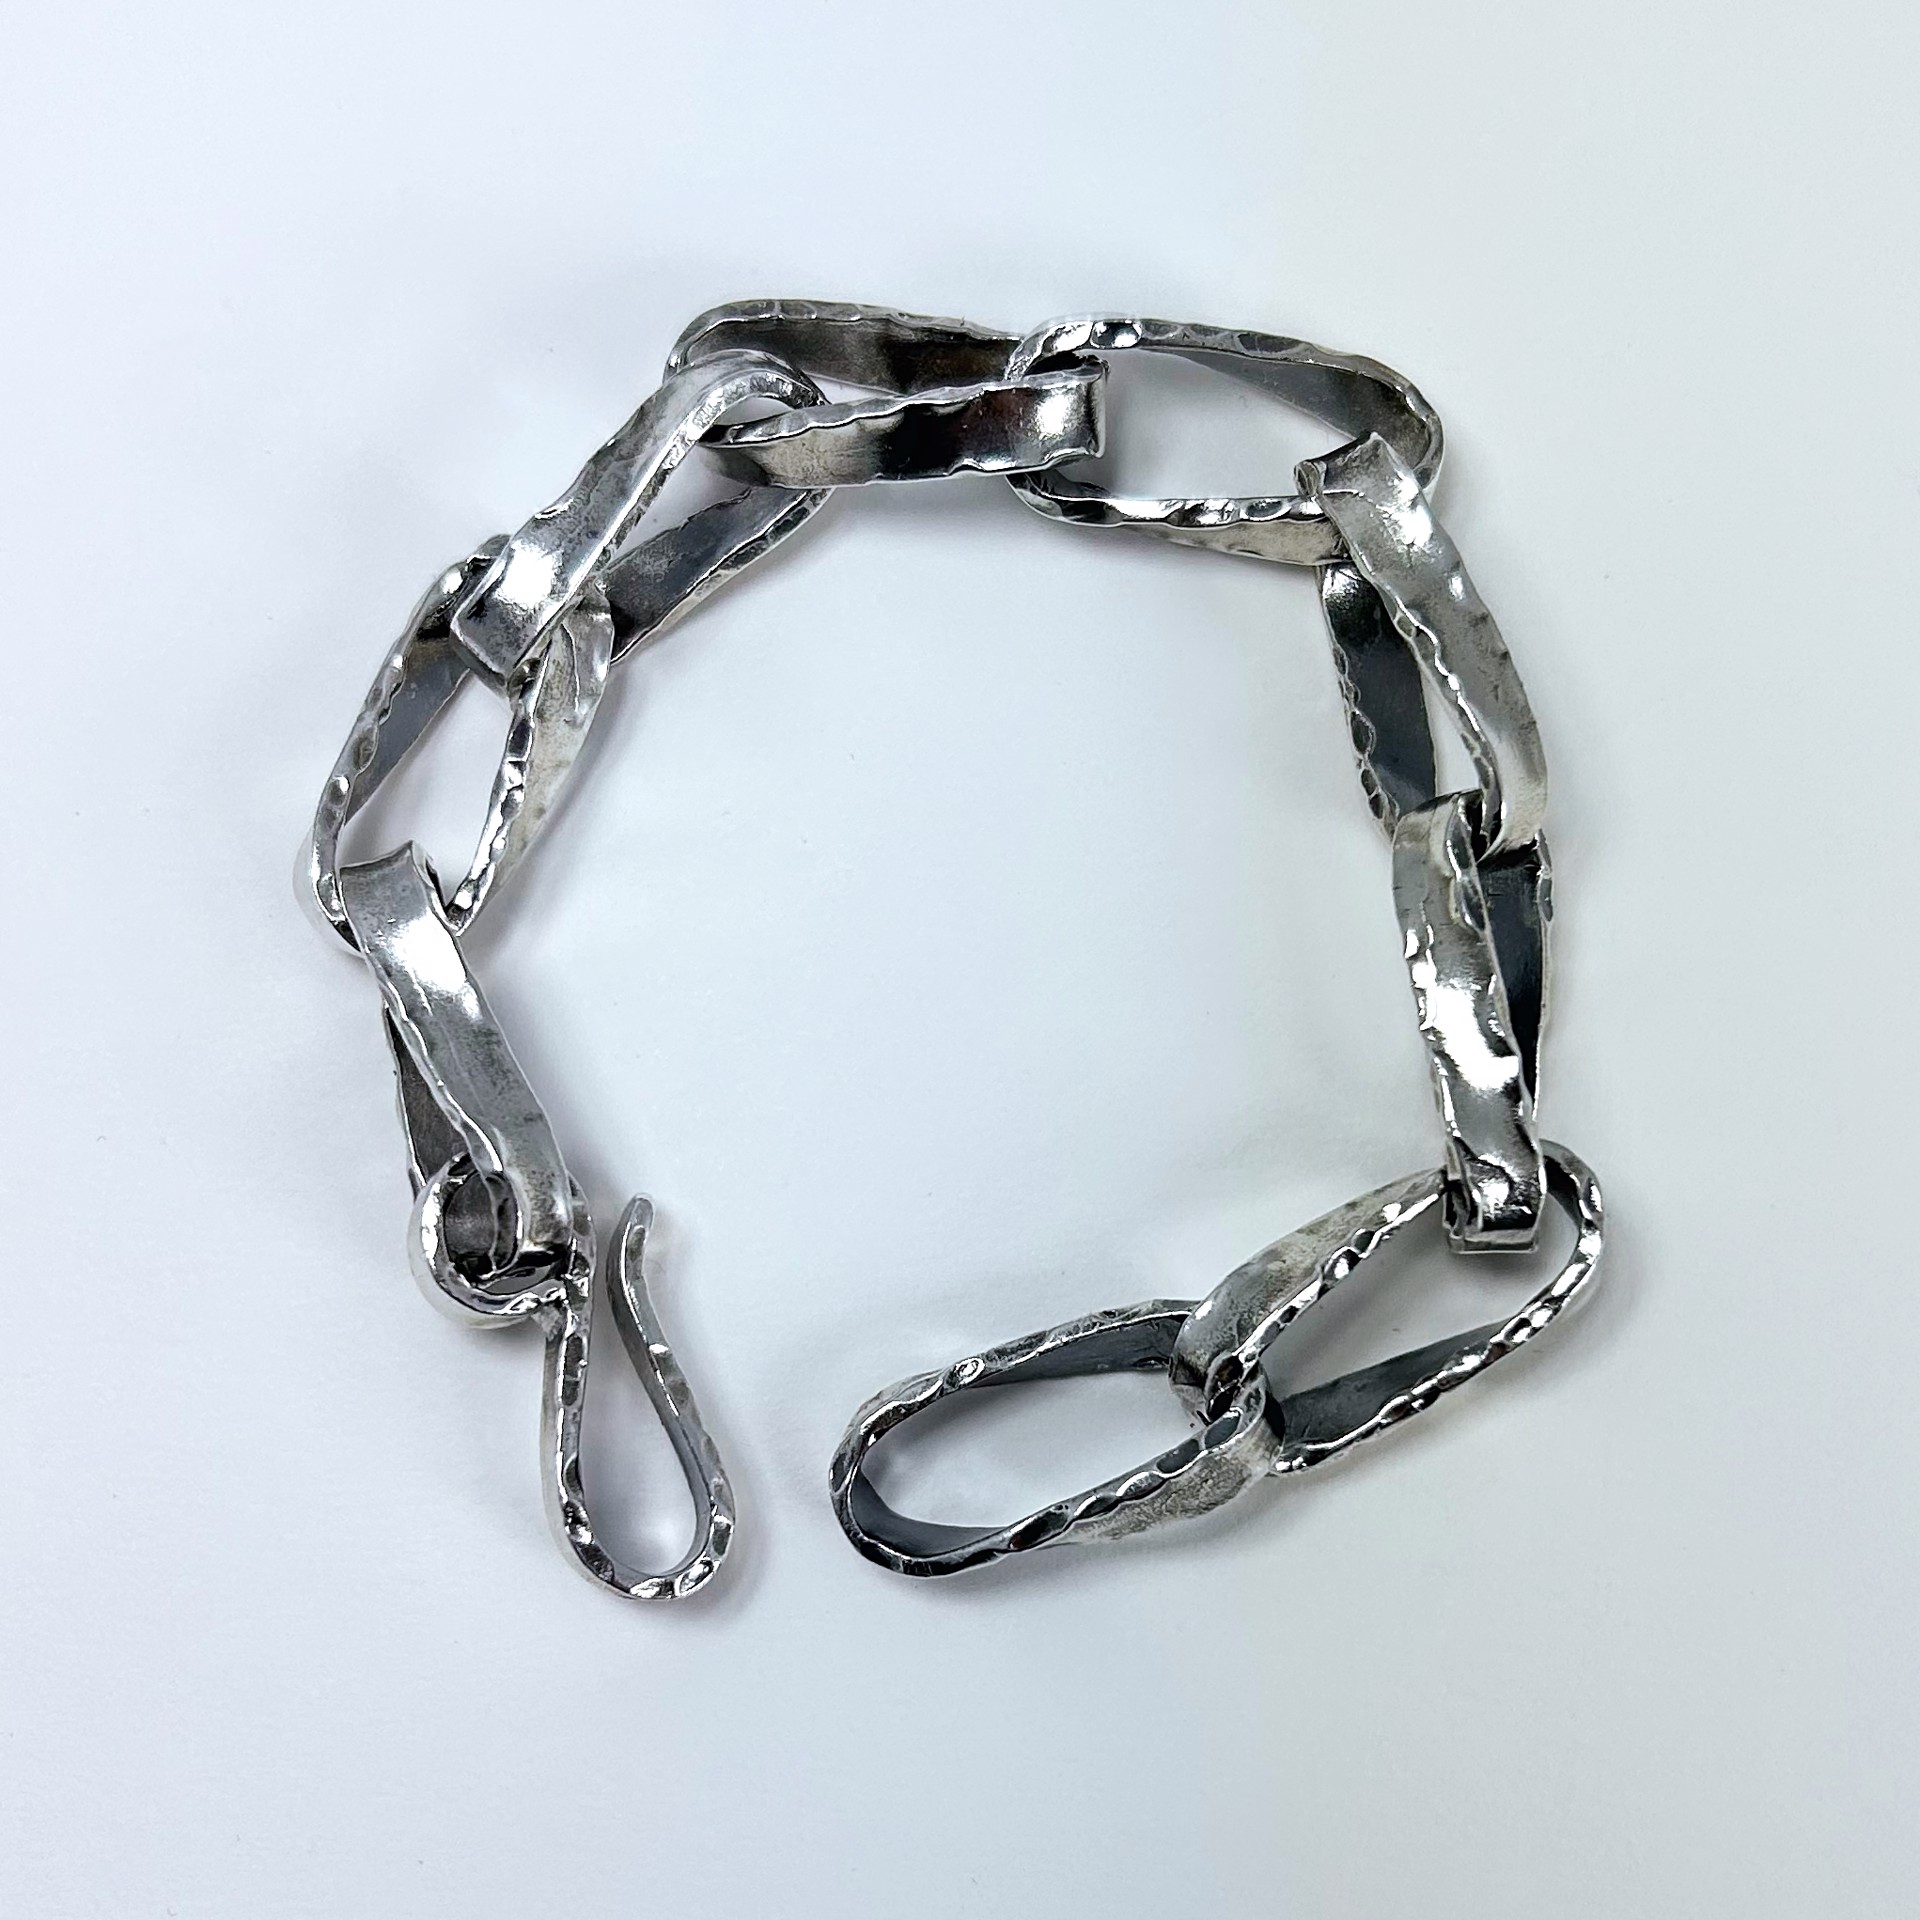 Large link rustic bracelet by Jeri Mitrani